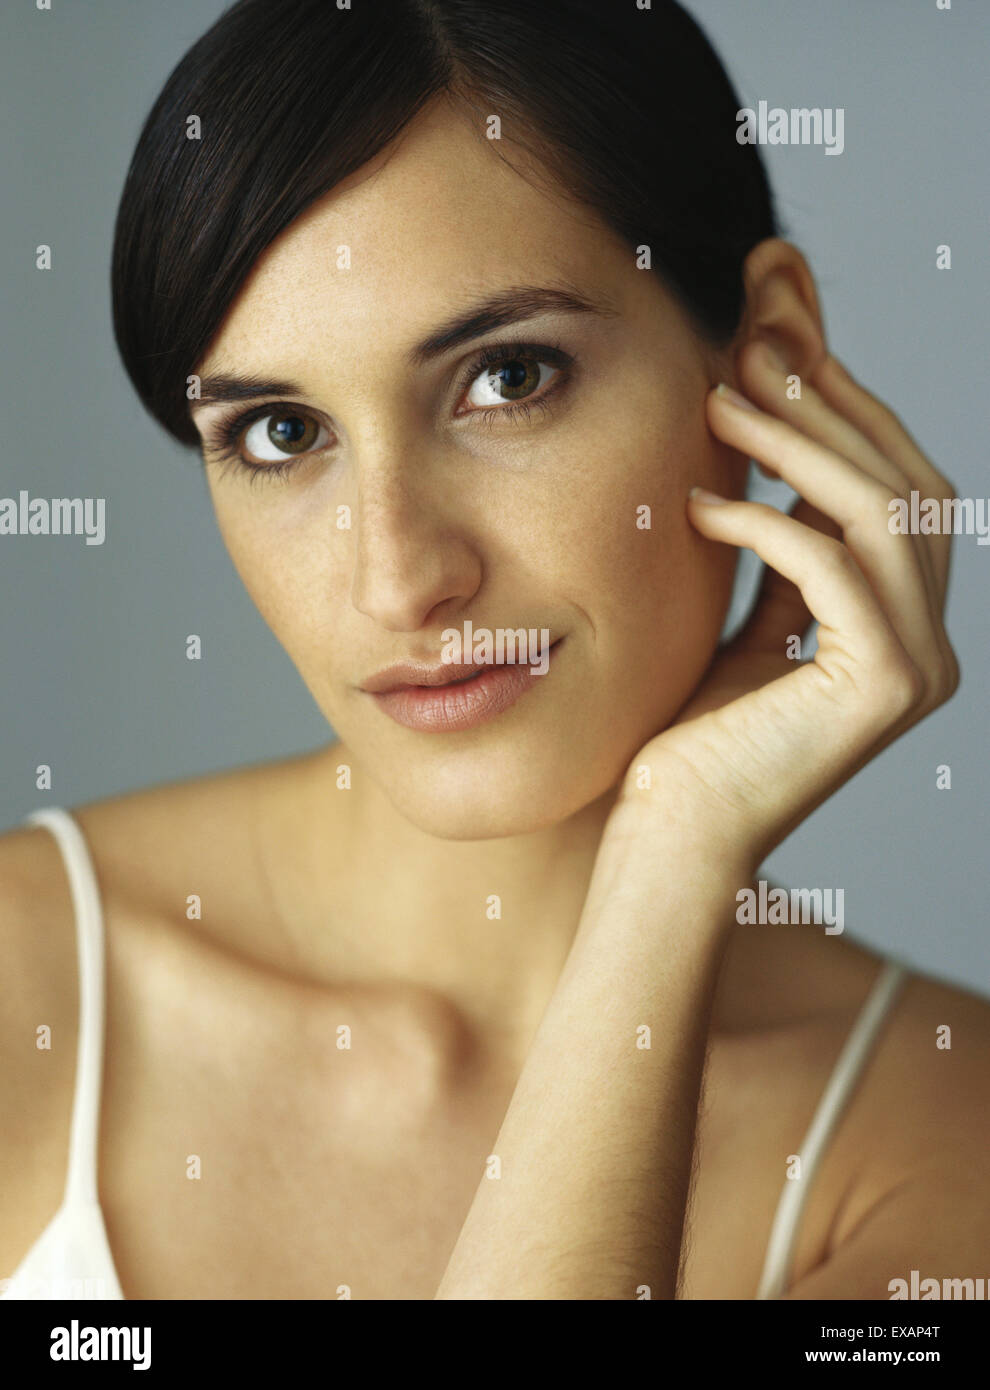 Woman holding head, portrait Stock Photo